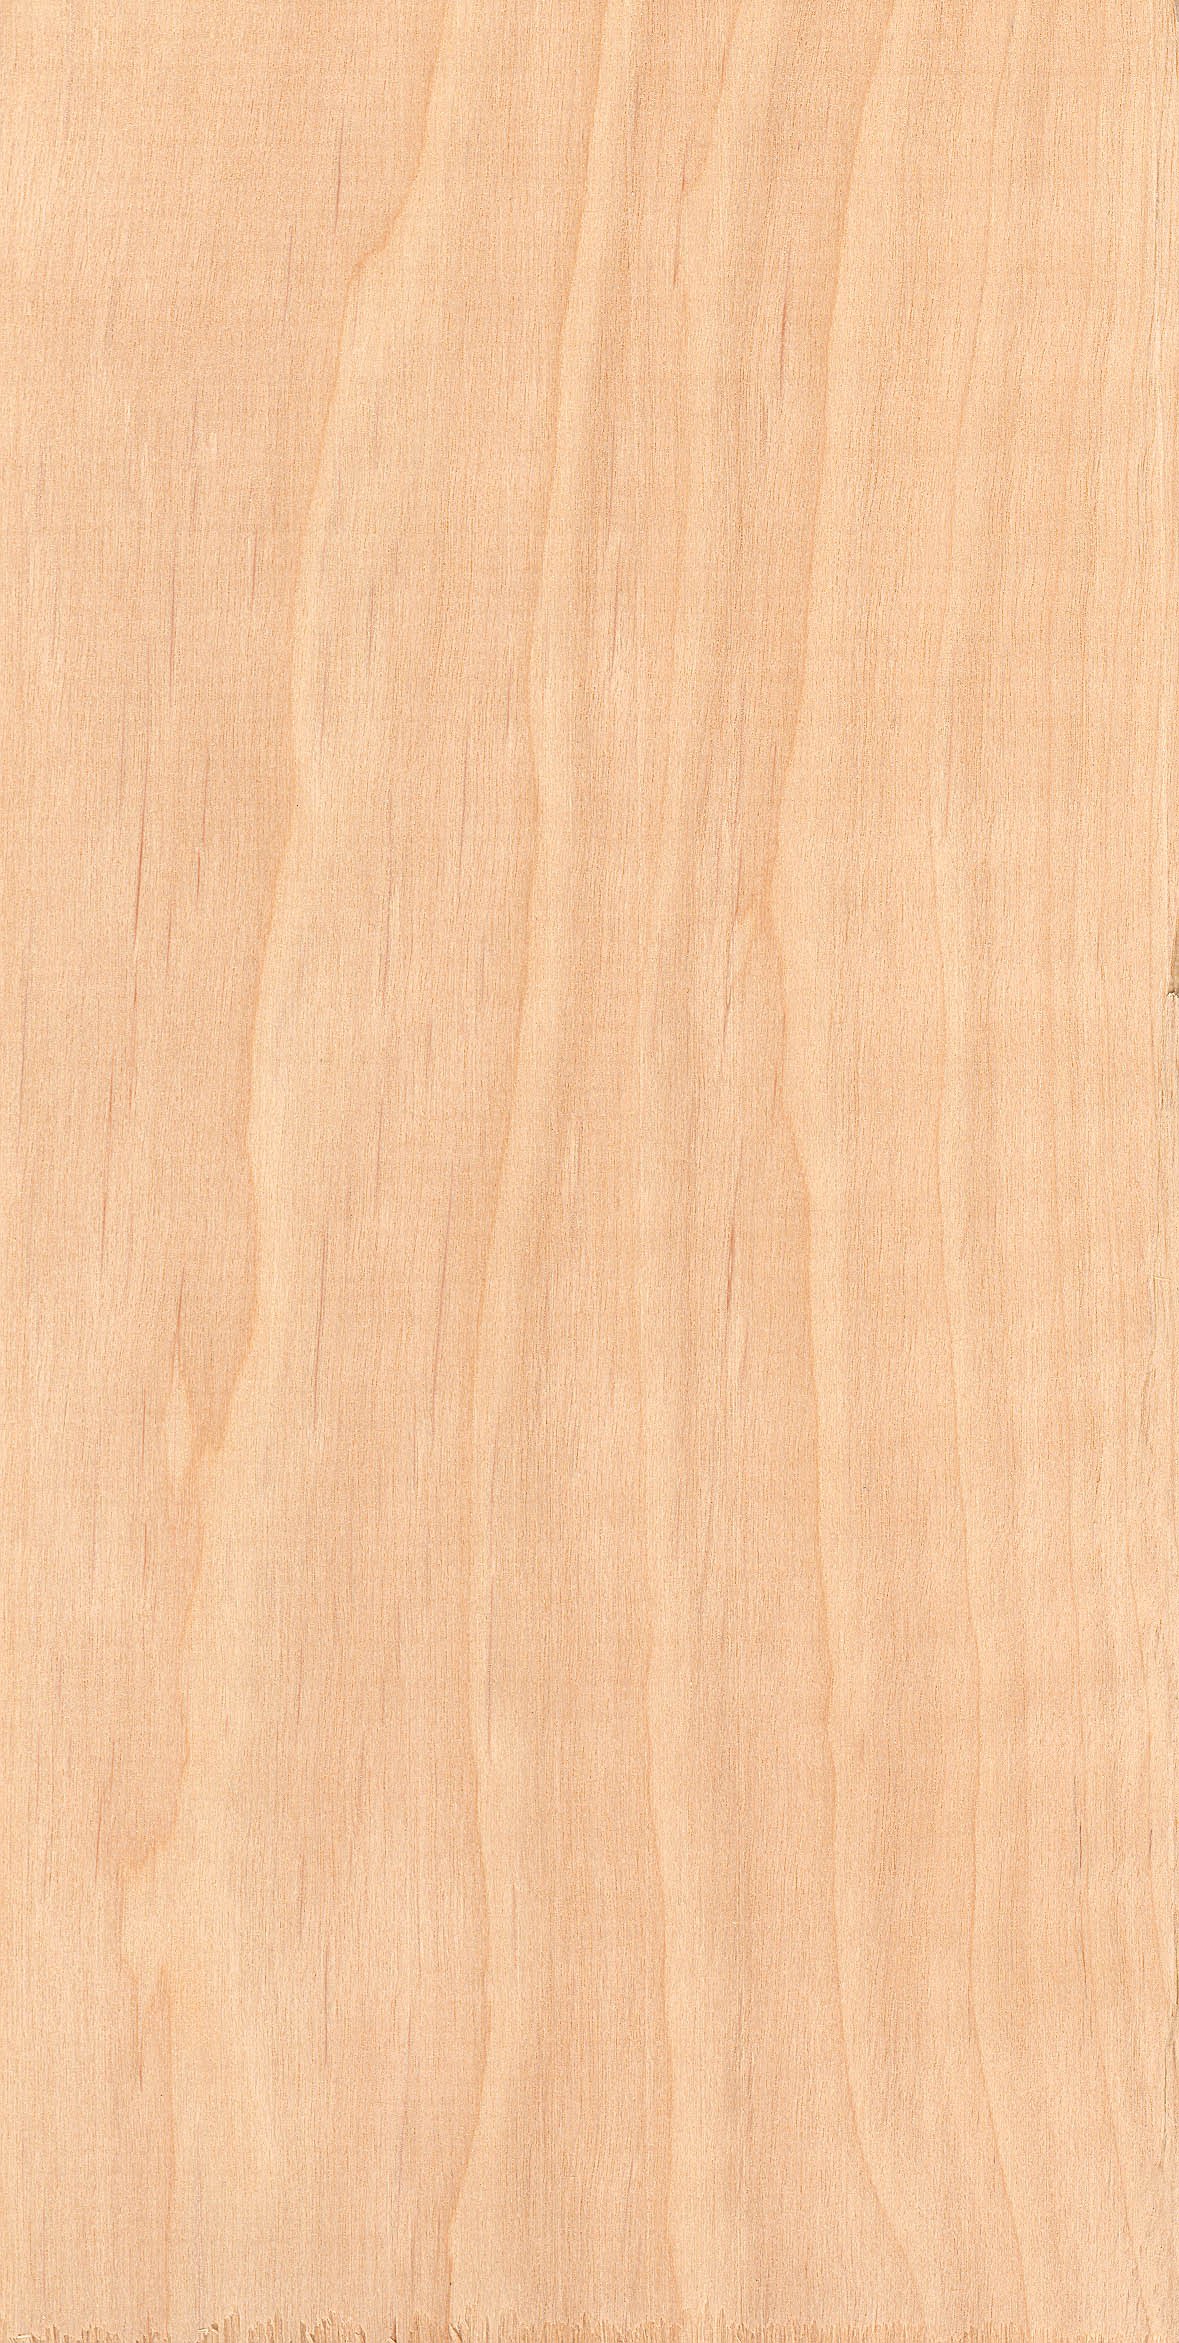 Korngröße 0-2 mm 400g Räucherspäne vom Erlenholz Räuchermehl Erle